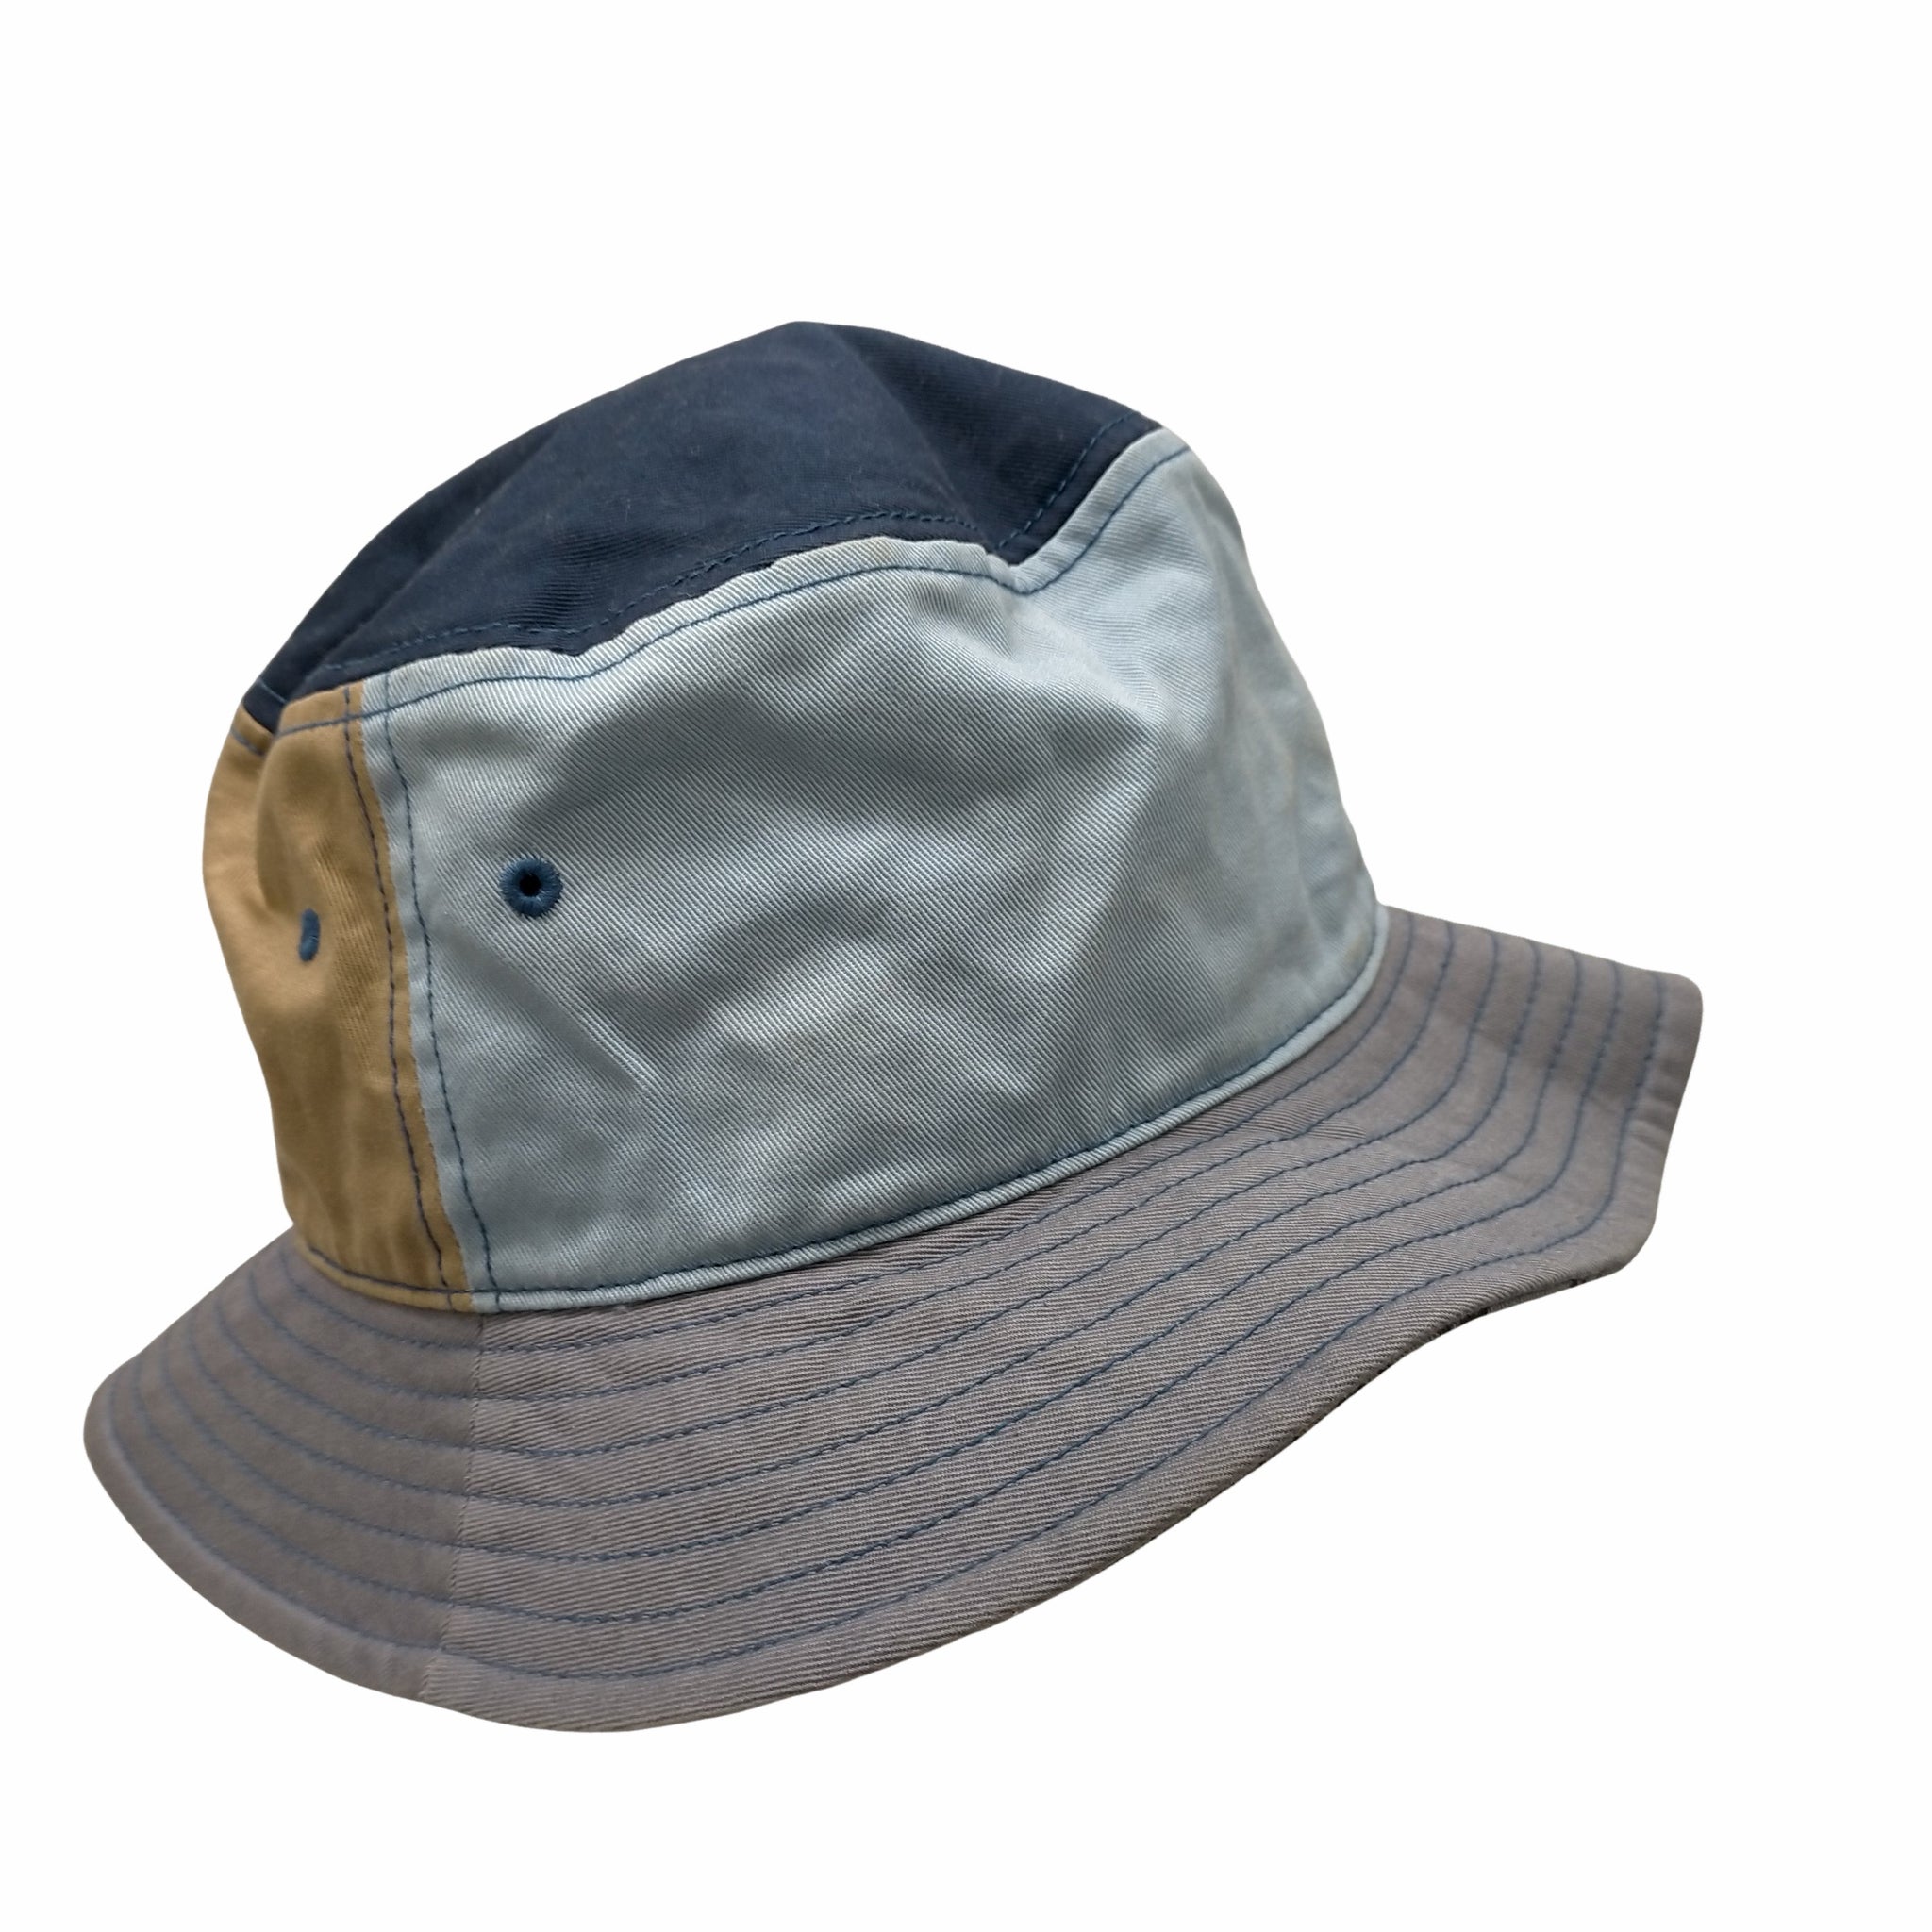 The Superior Labor デニムバケットハット - 帽子